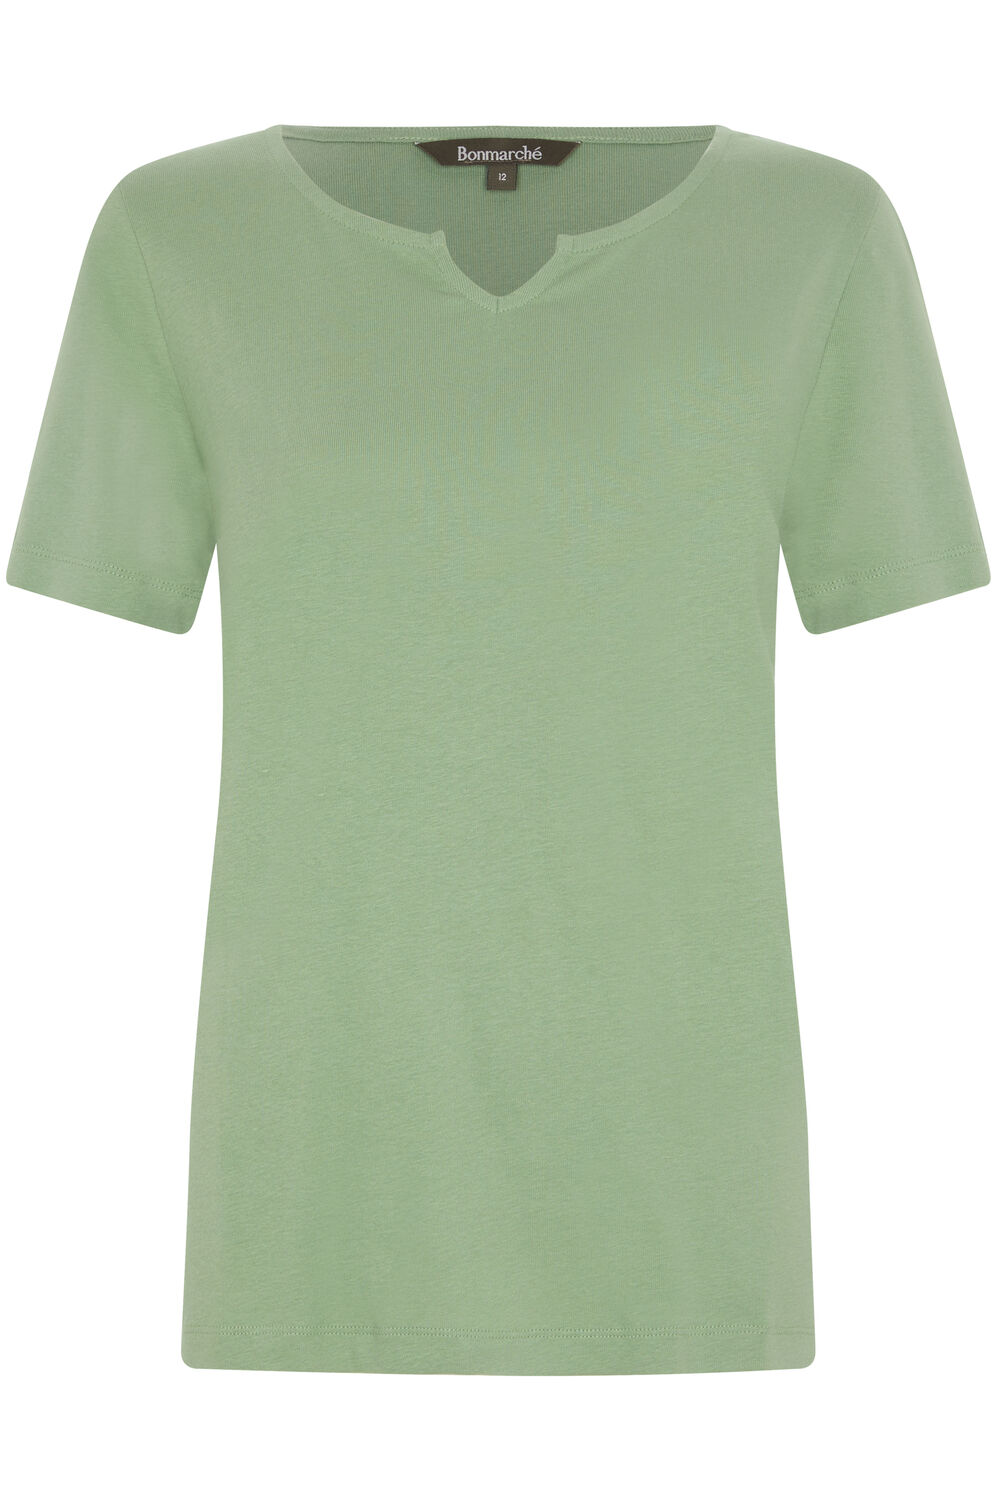 Bonmarche Khaki Short Sleeve Plain Notch Neck T-Shirt, Size: 16